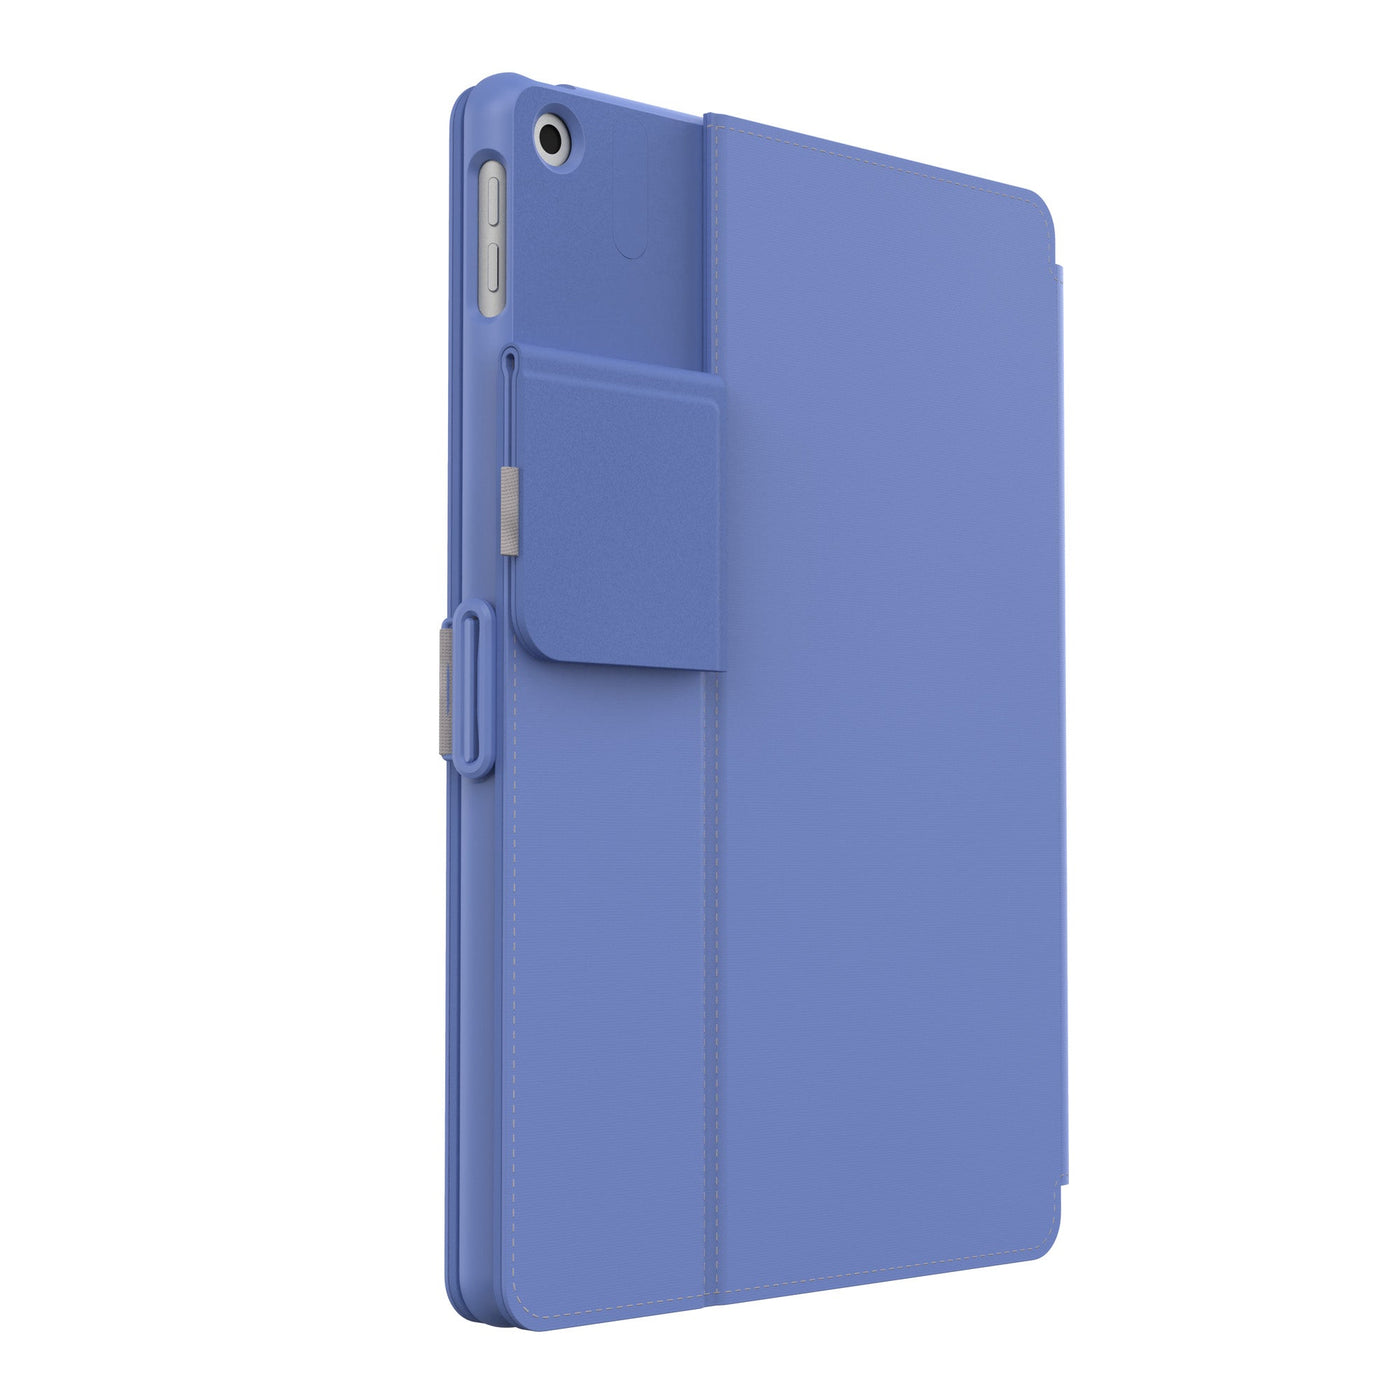 Speck - Balance Folio Case for Apple iPad mini 6 - Black